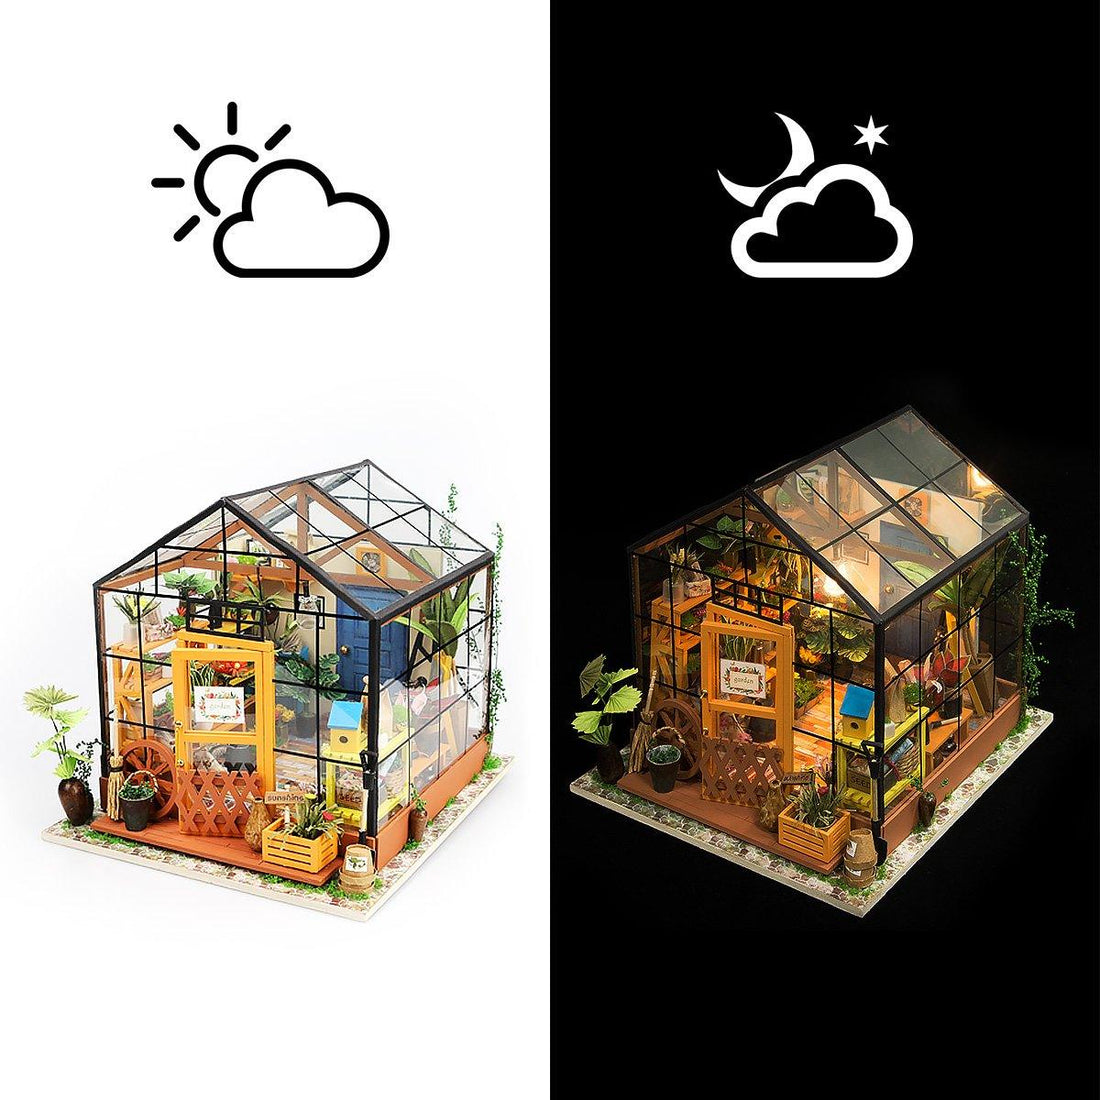 Cathy's Flower House Miniature Wooden Dollhouse - Kitty Hawk Kites Online Store